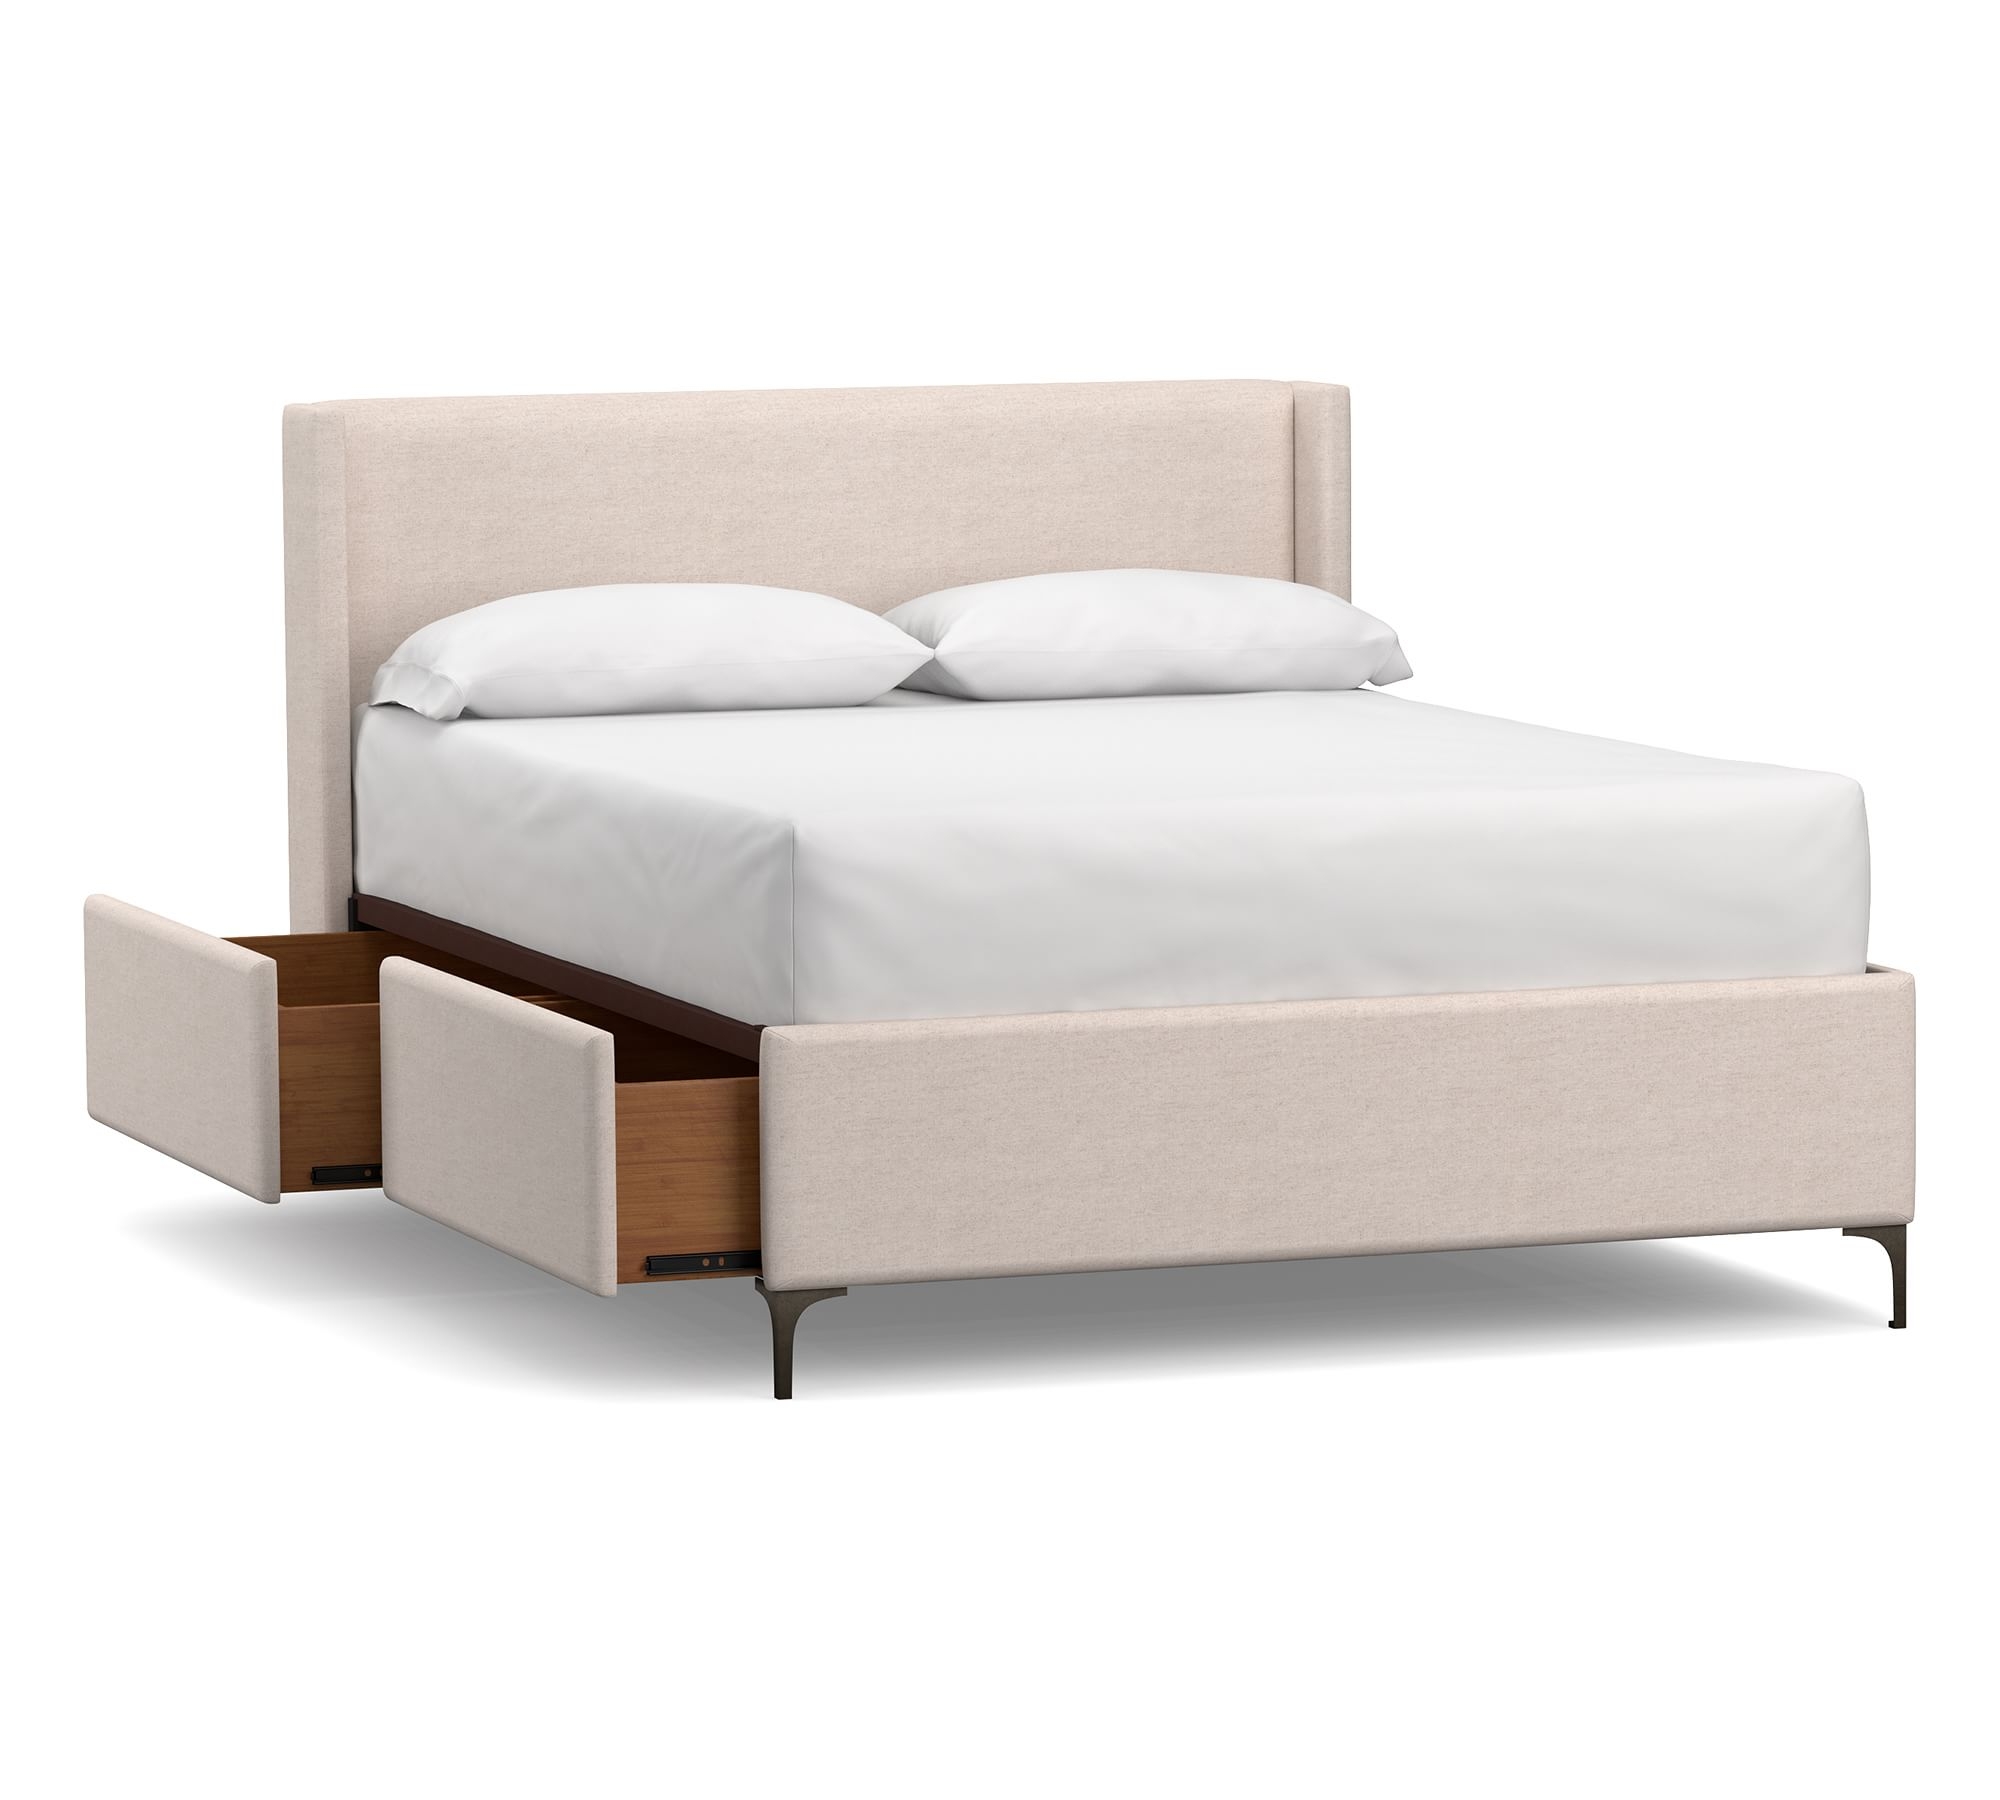 Jake Upholstered Storage Platform Bed with Metal Legs, Full, Performance Heathered Basketweave Dove - Image 1